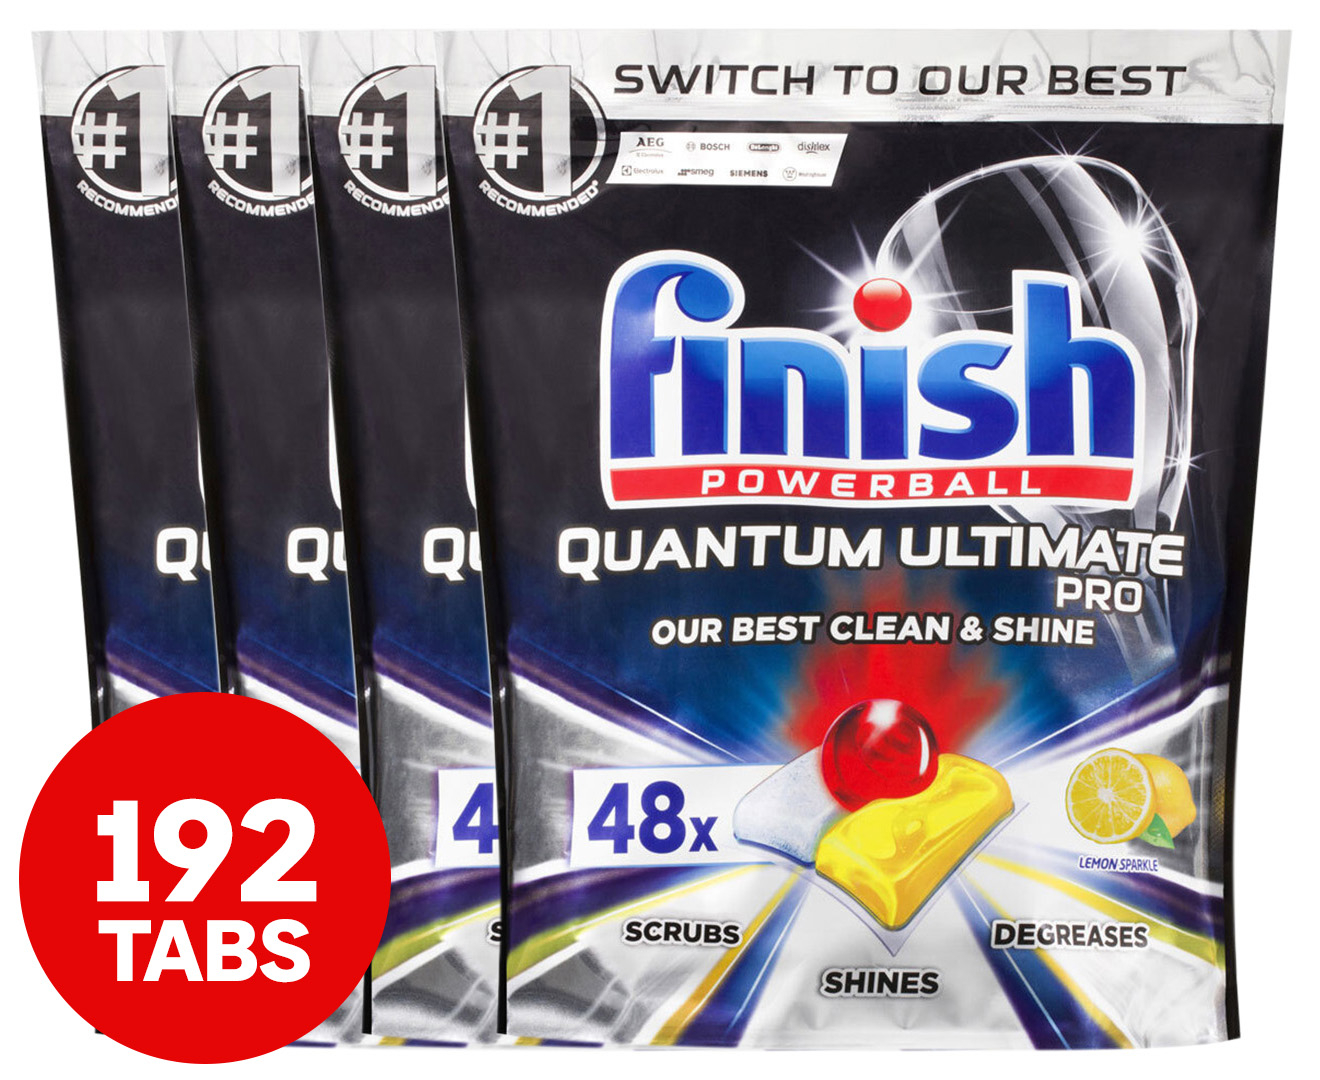 4 X 48pk Finish Powerball Quantum Ultimate Pro Dishwashing Tablets Lemon Sparkle Nz